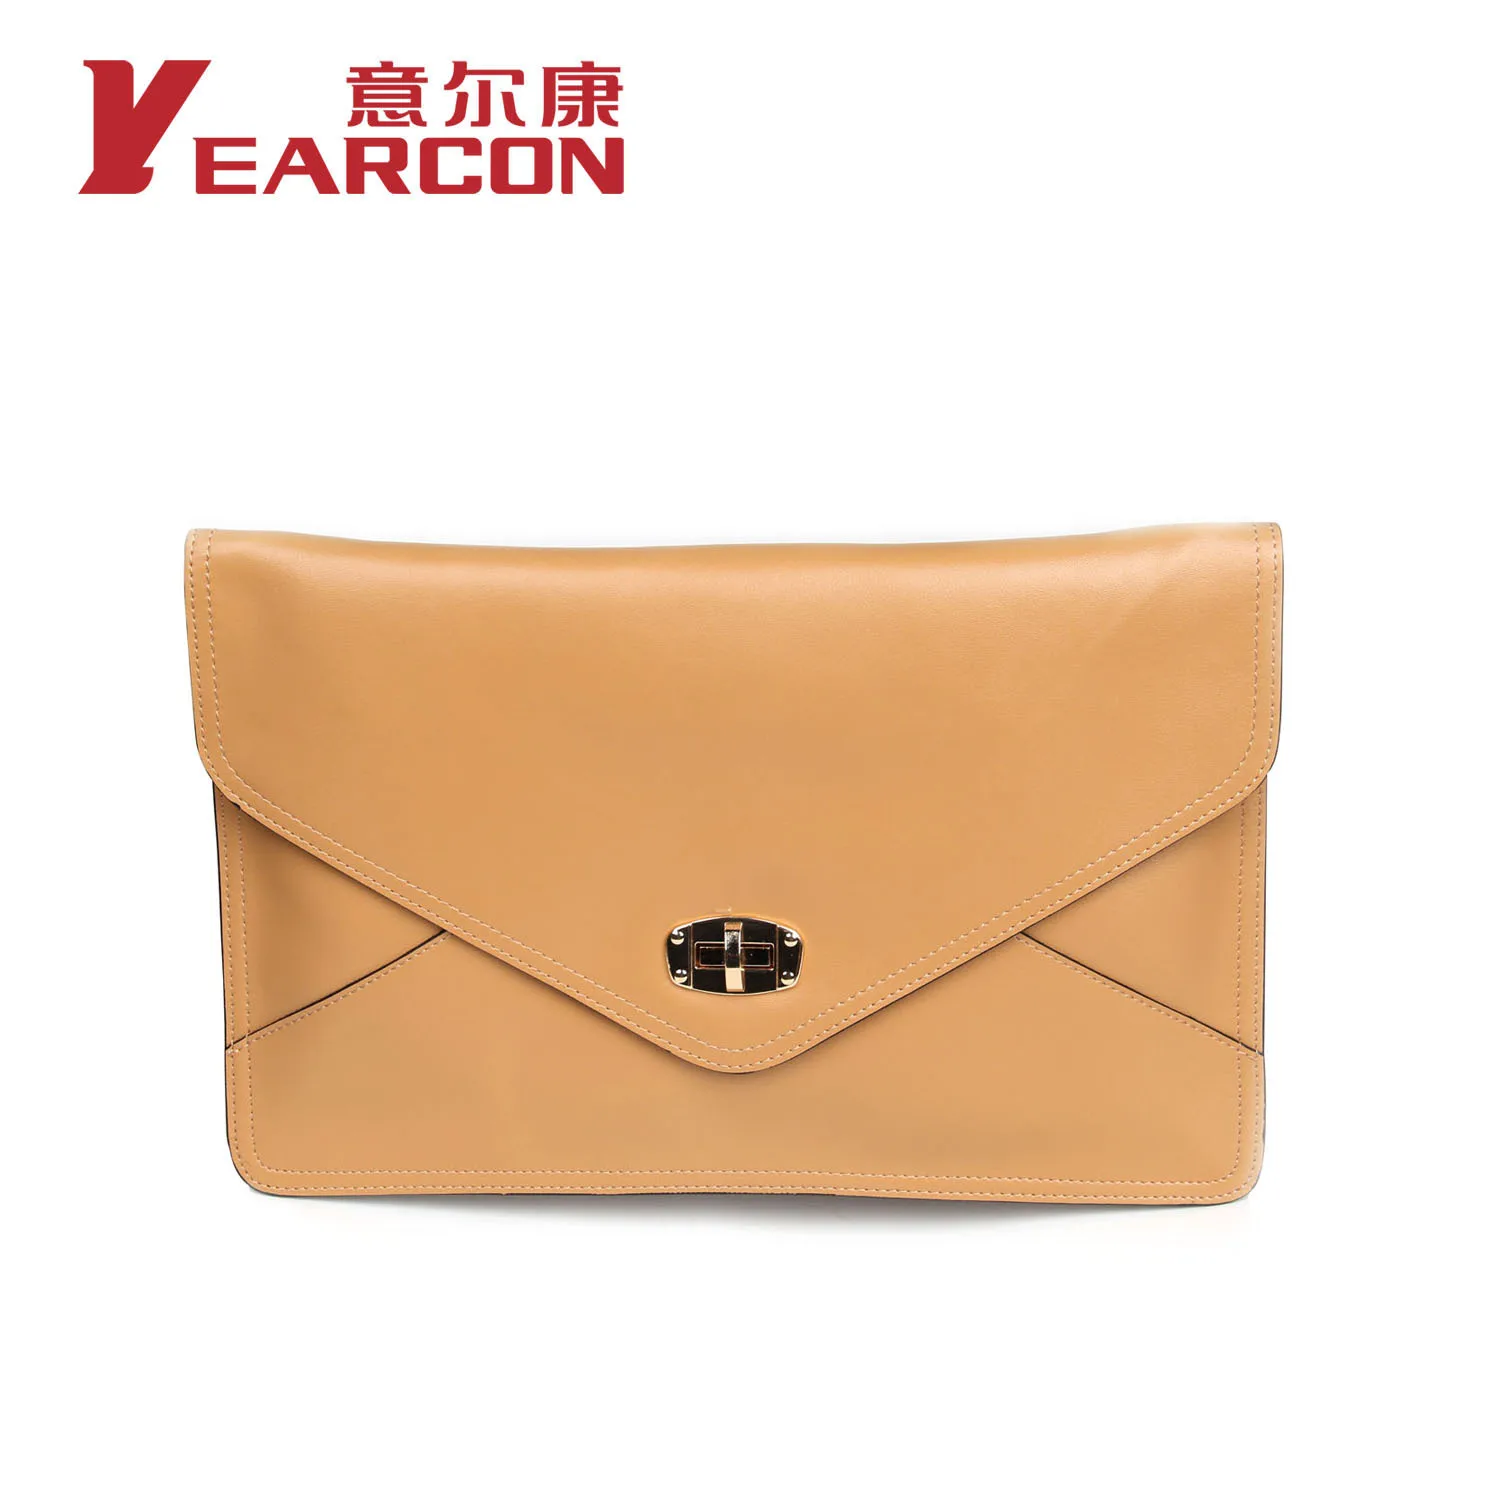 Yierkang (yearcon) bag women's bag Messenger bag stitching color contrast  handbag tassel all-match single shoulder